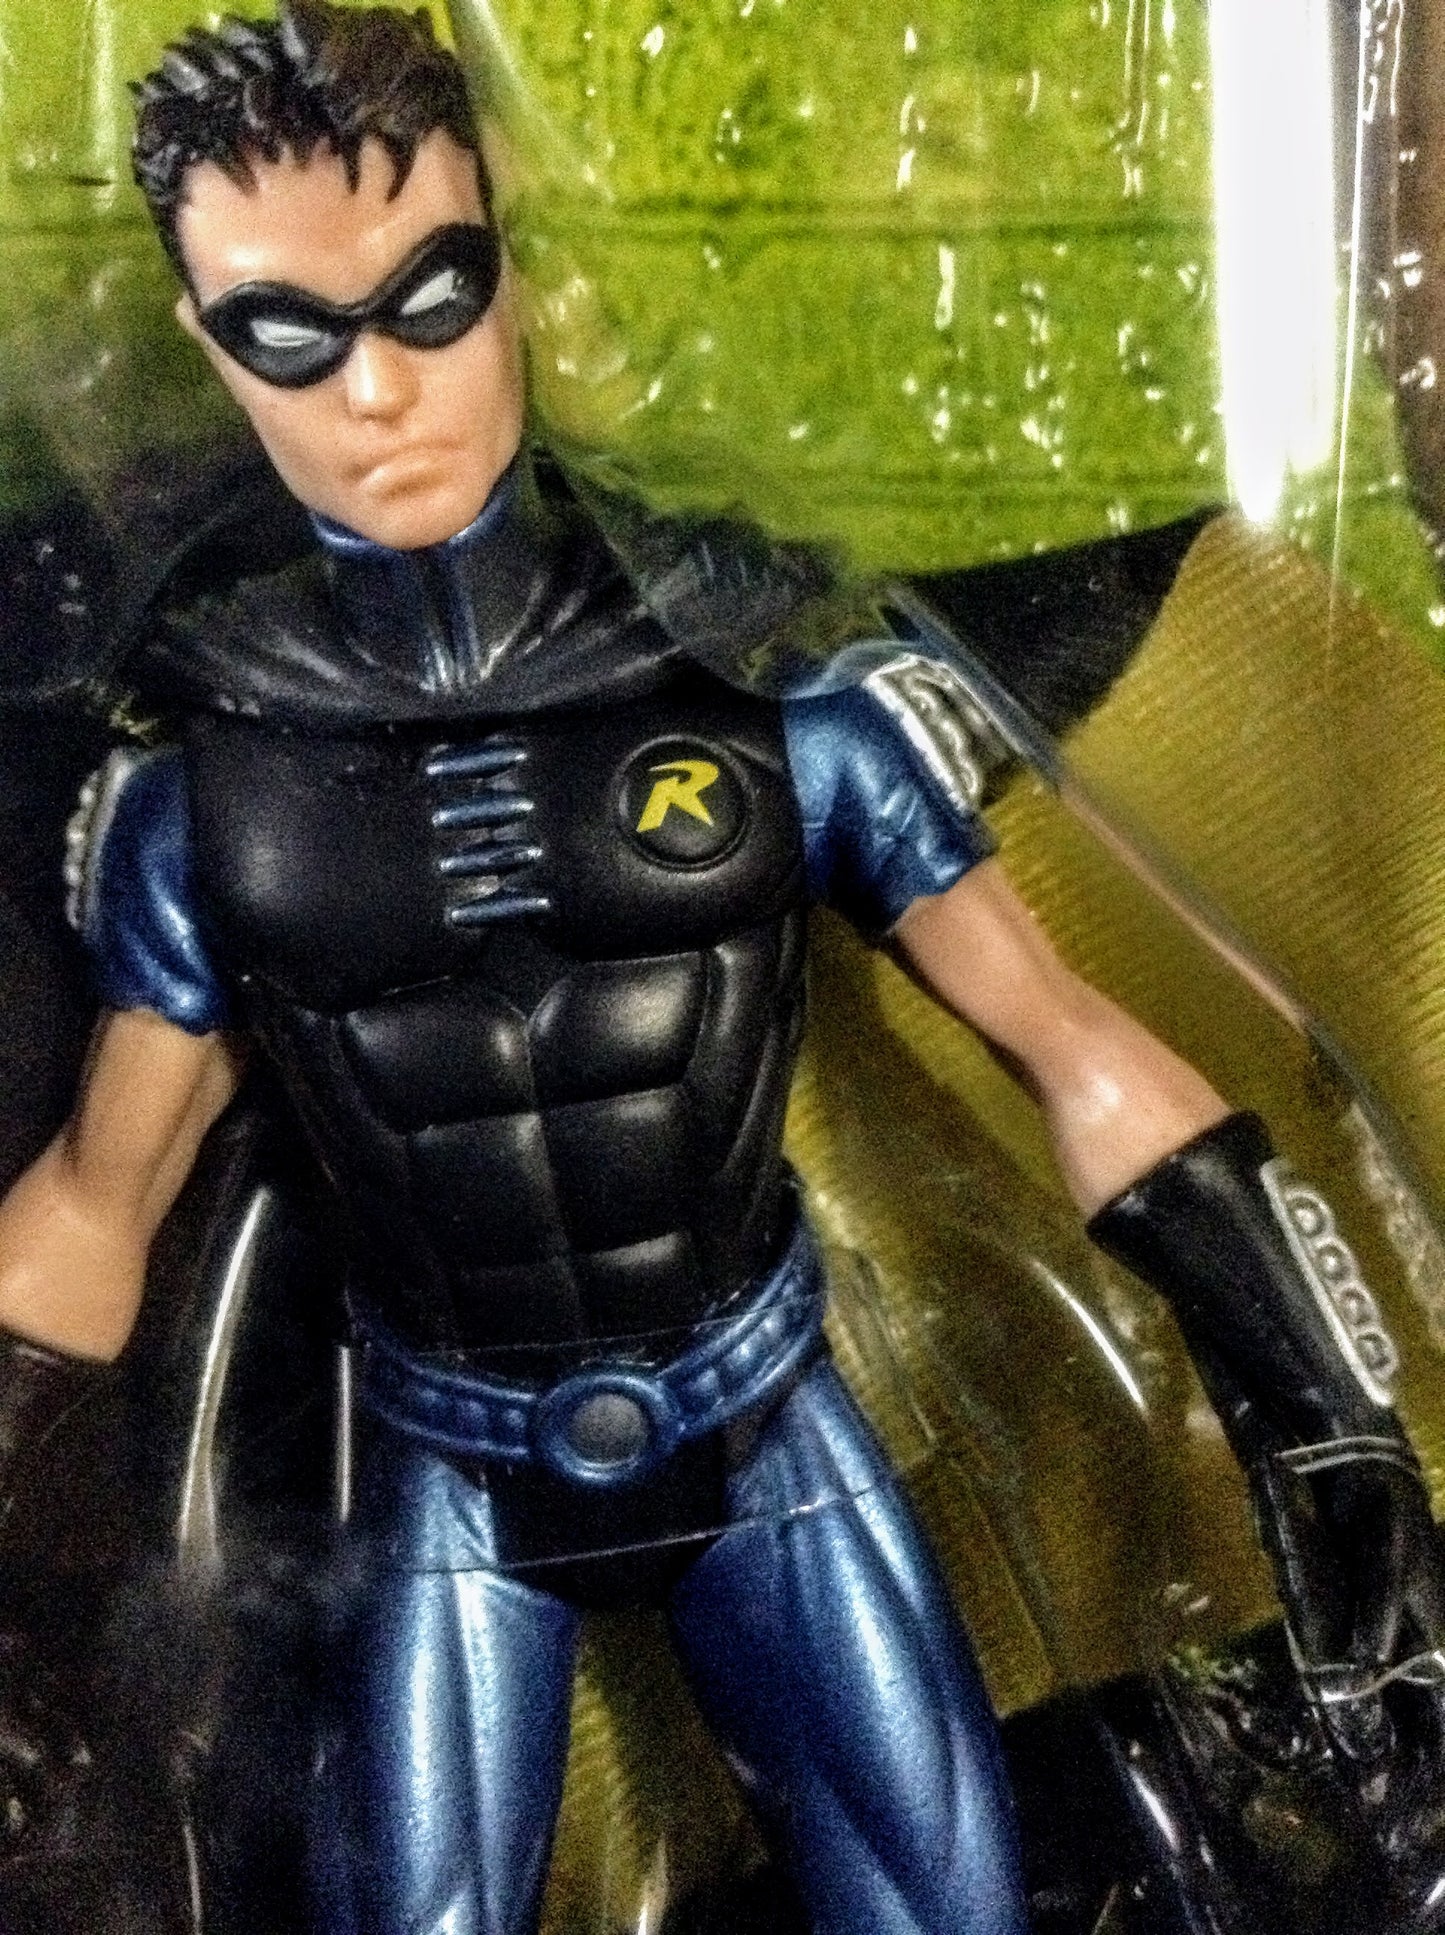 Toys "R" Us Exclusive: Batman & Robin